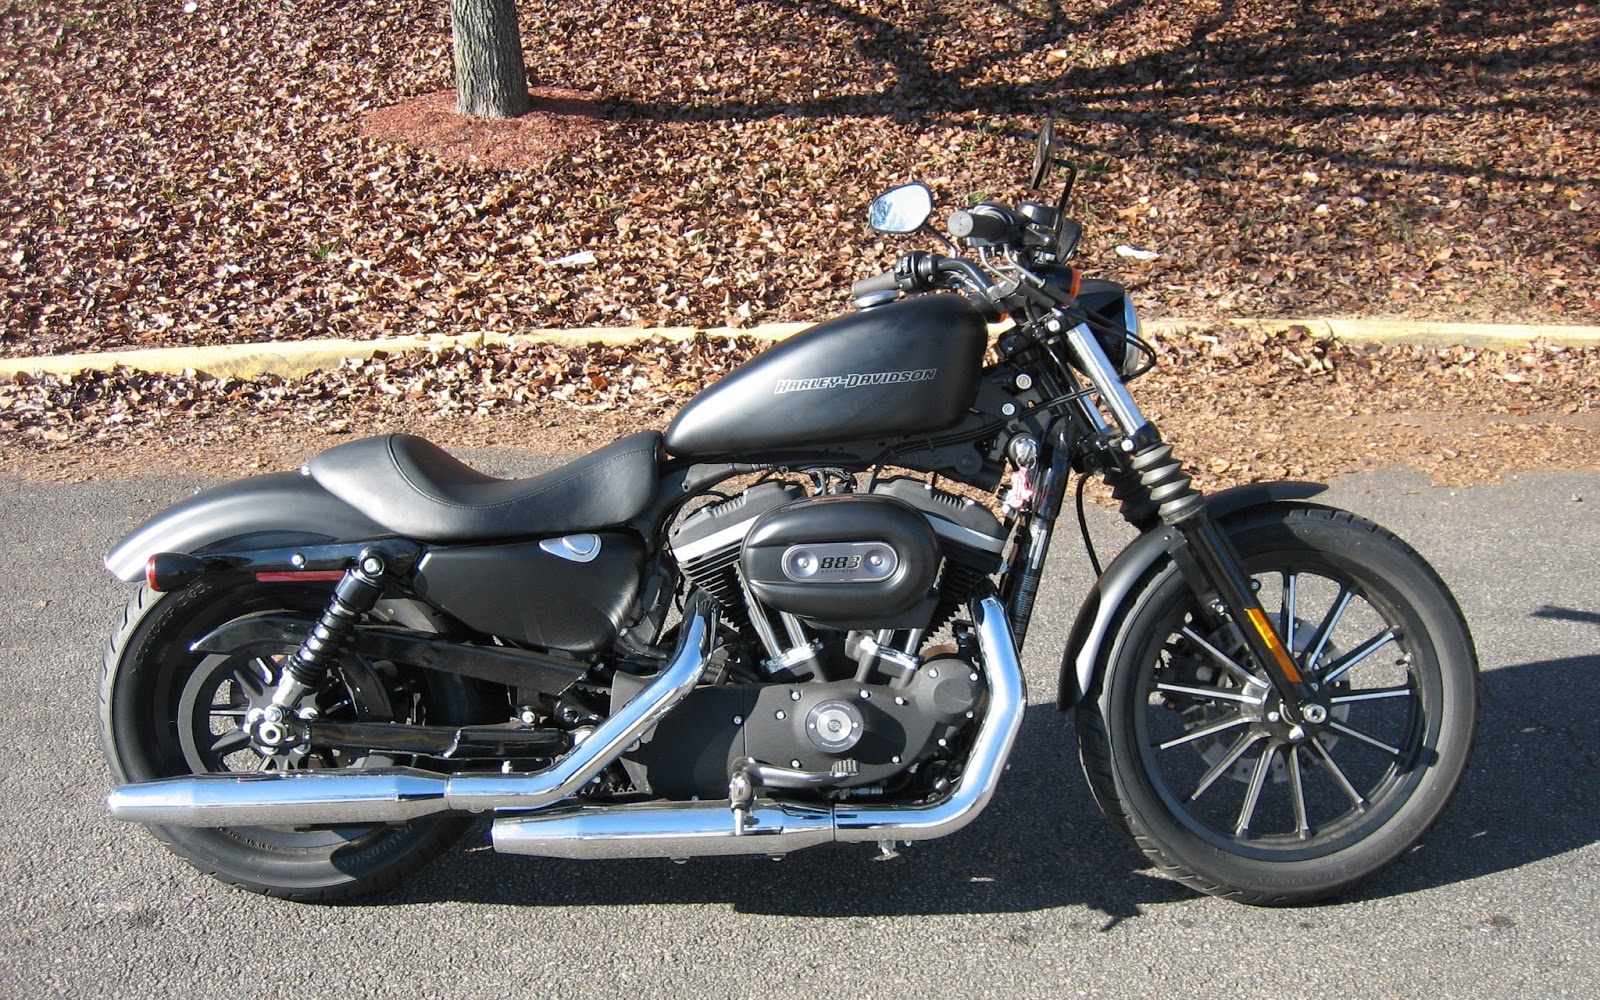 Harley Davidson Iron HD Wallpaper High